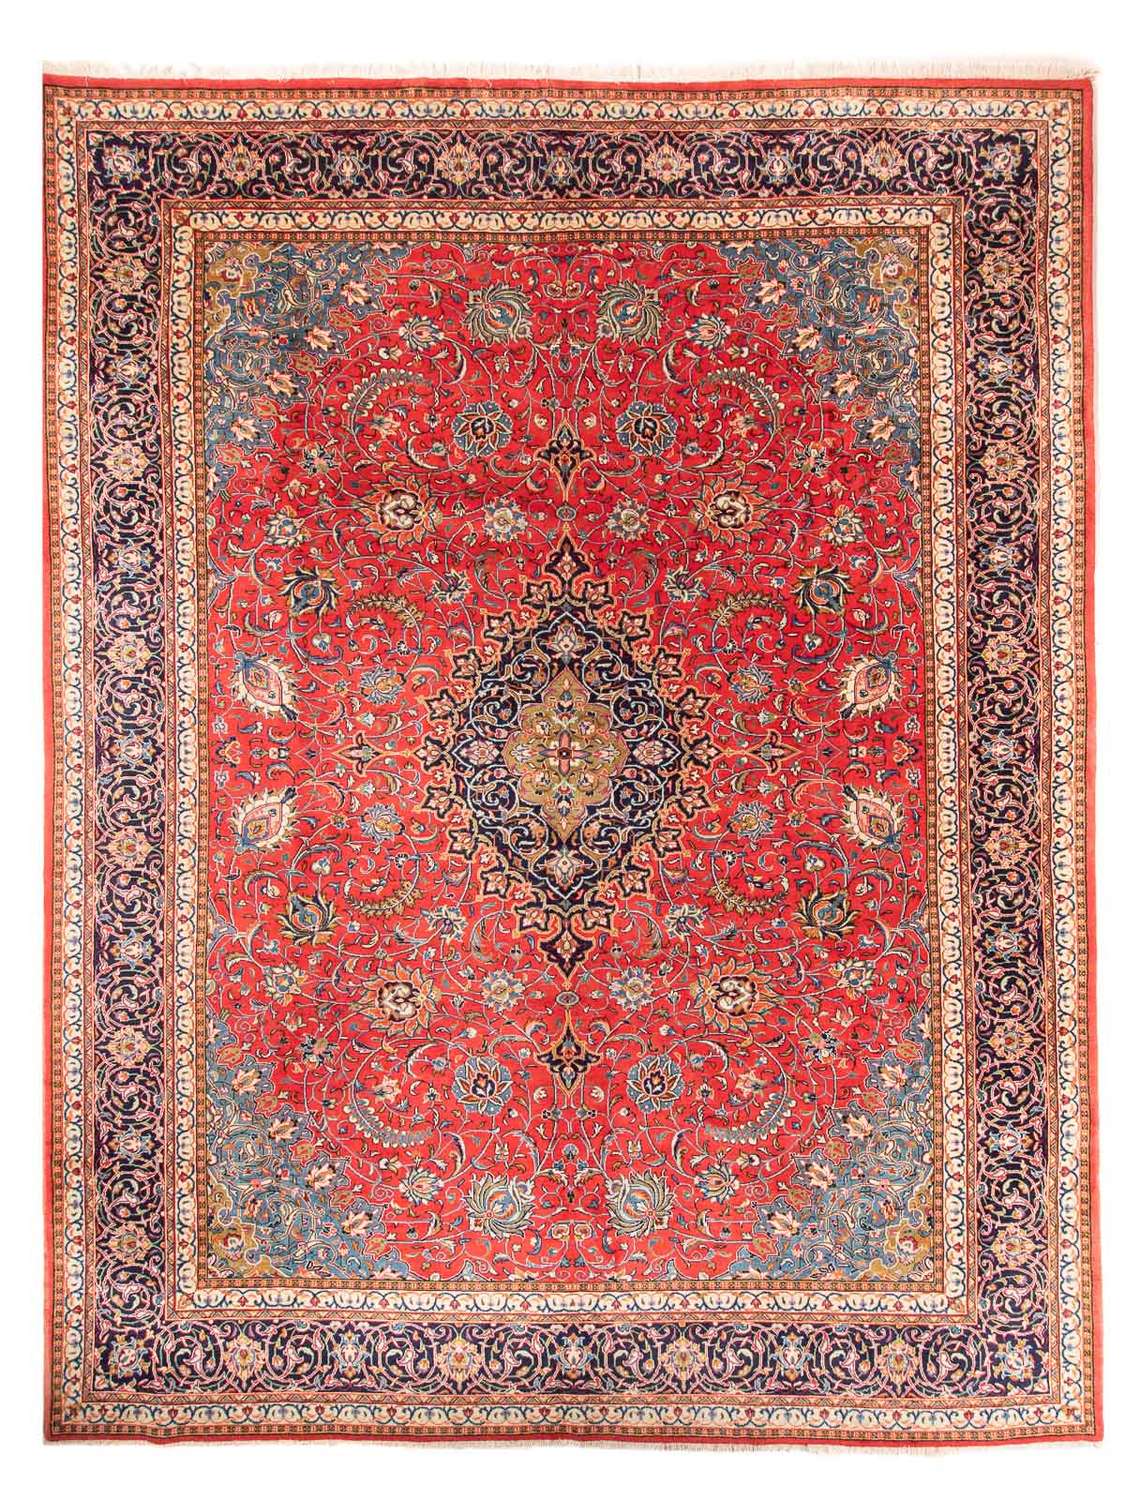 Perský koberec - Klasický - 397 x 305 cm - červená